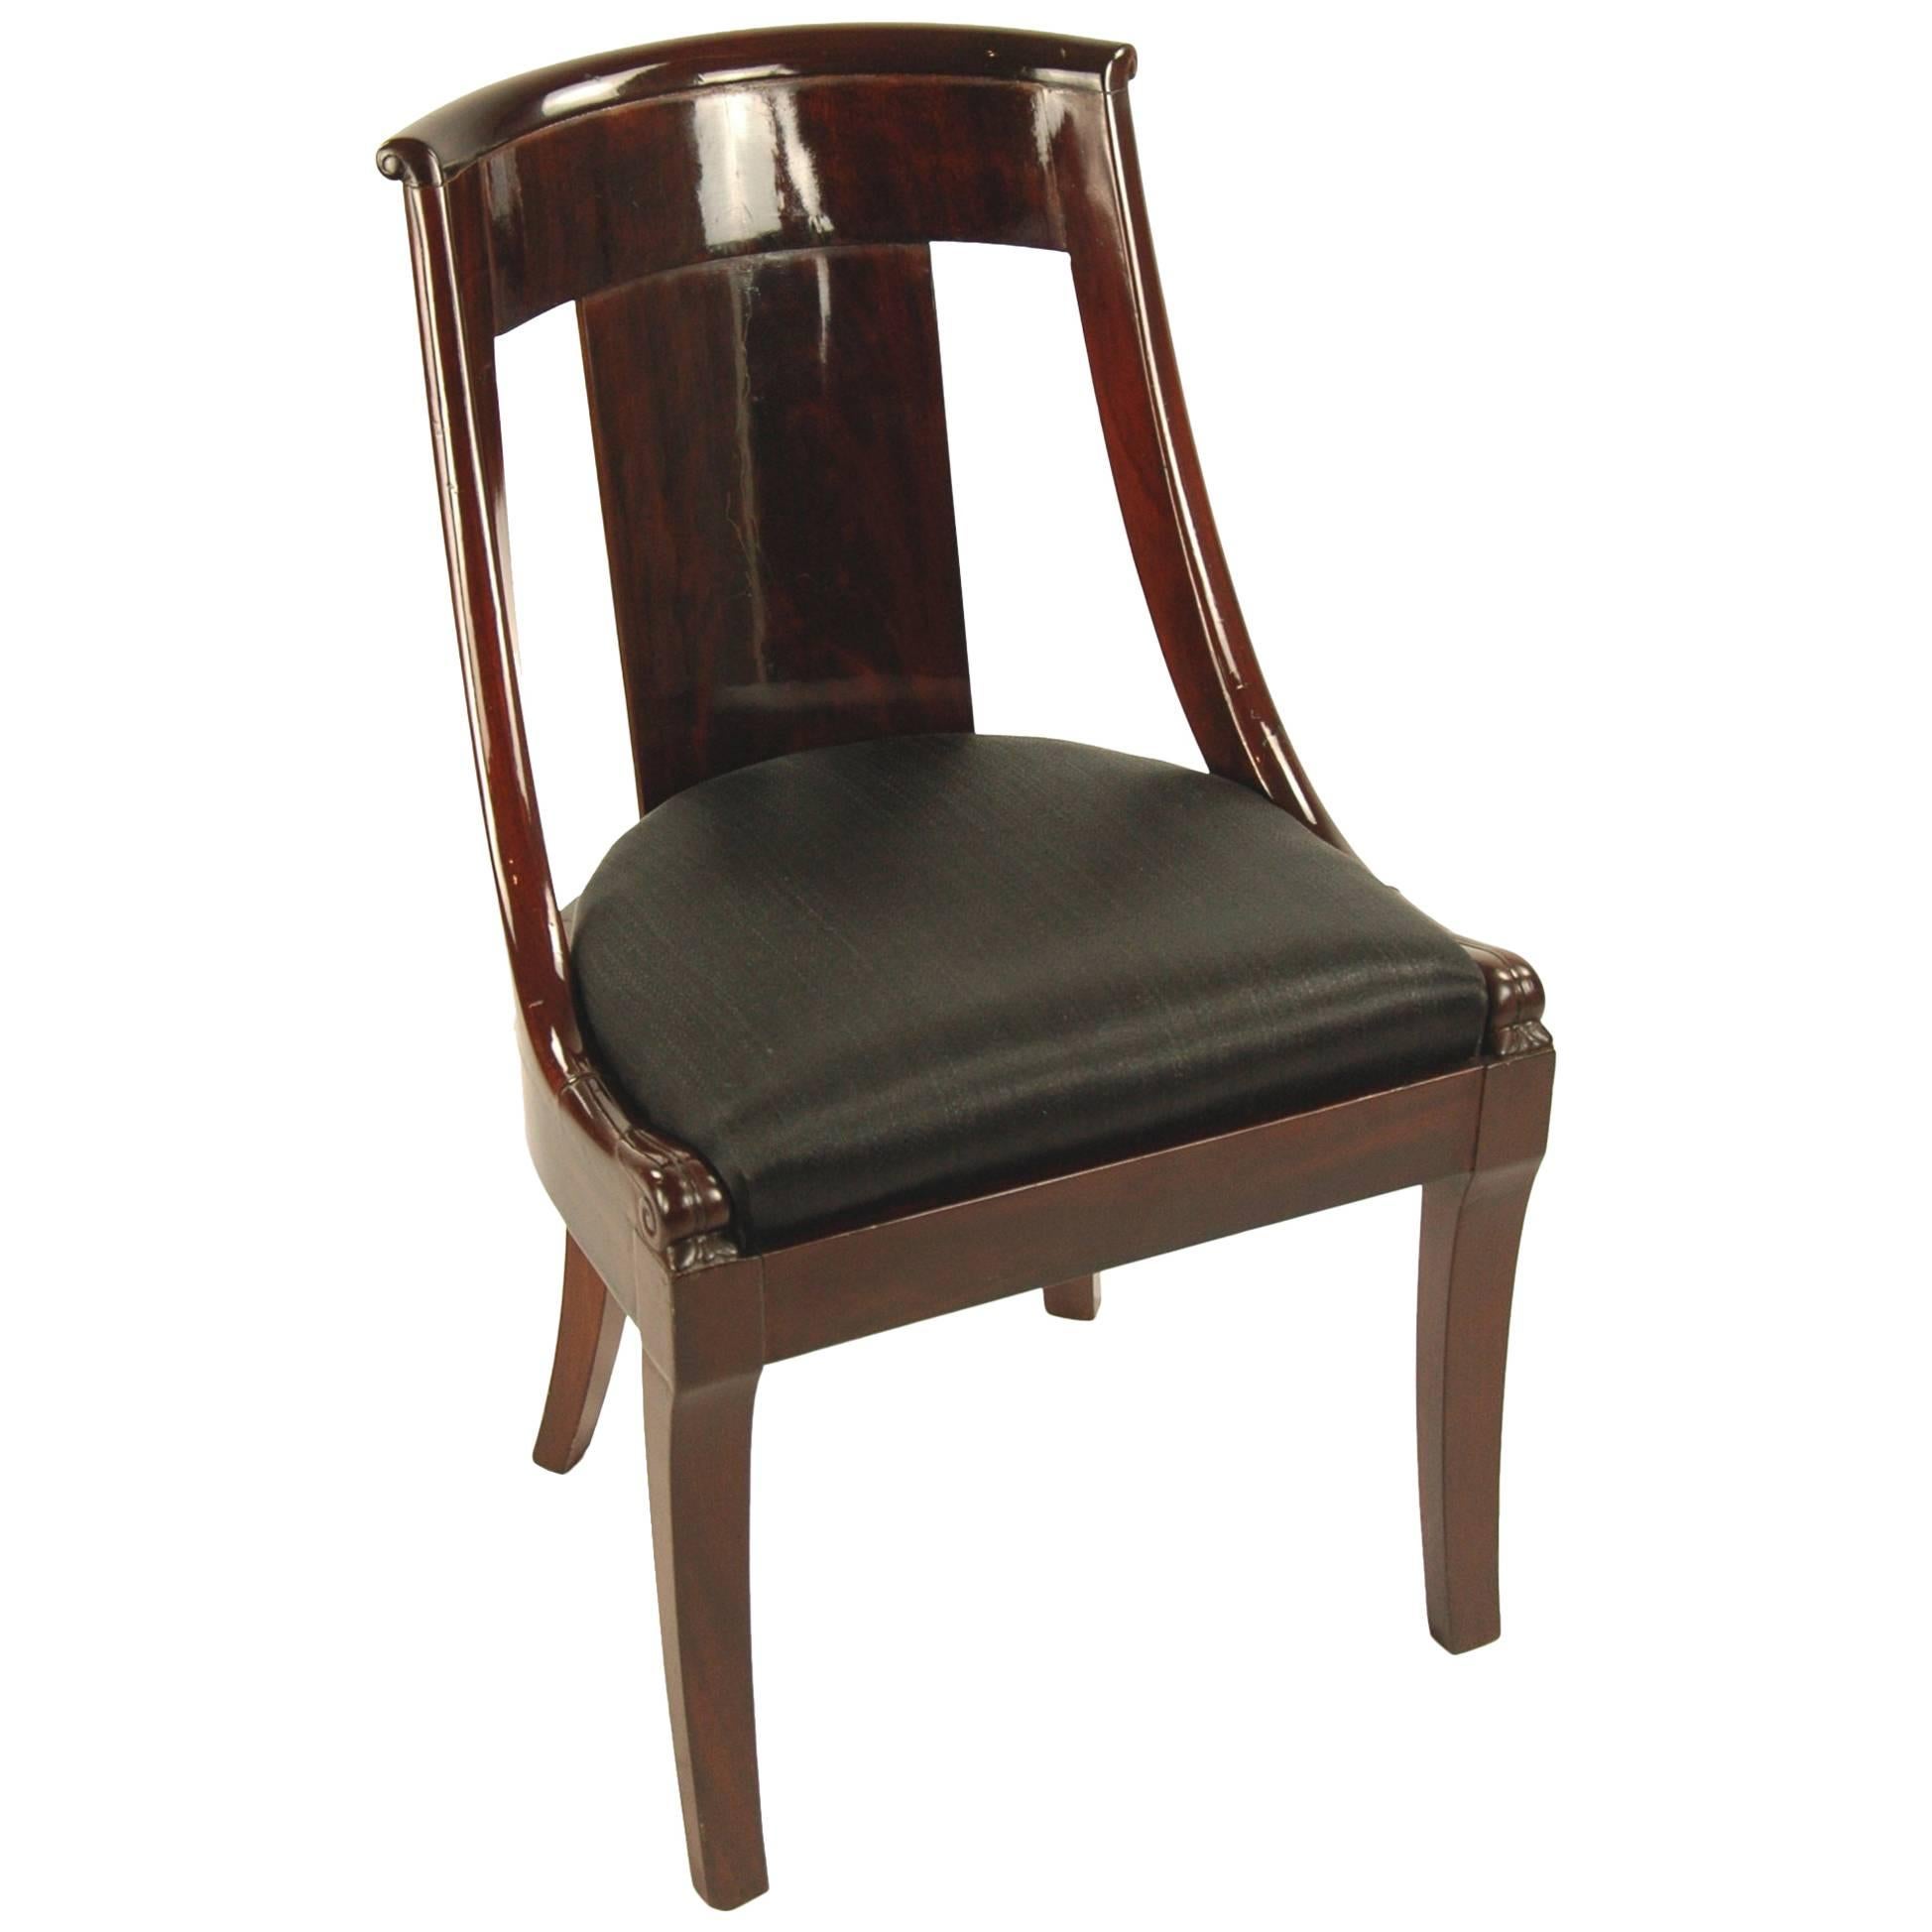 Gondola chair mahogany horsehair cover restored, France, circa 1810